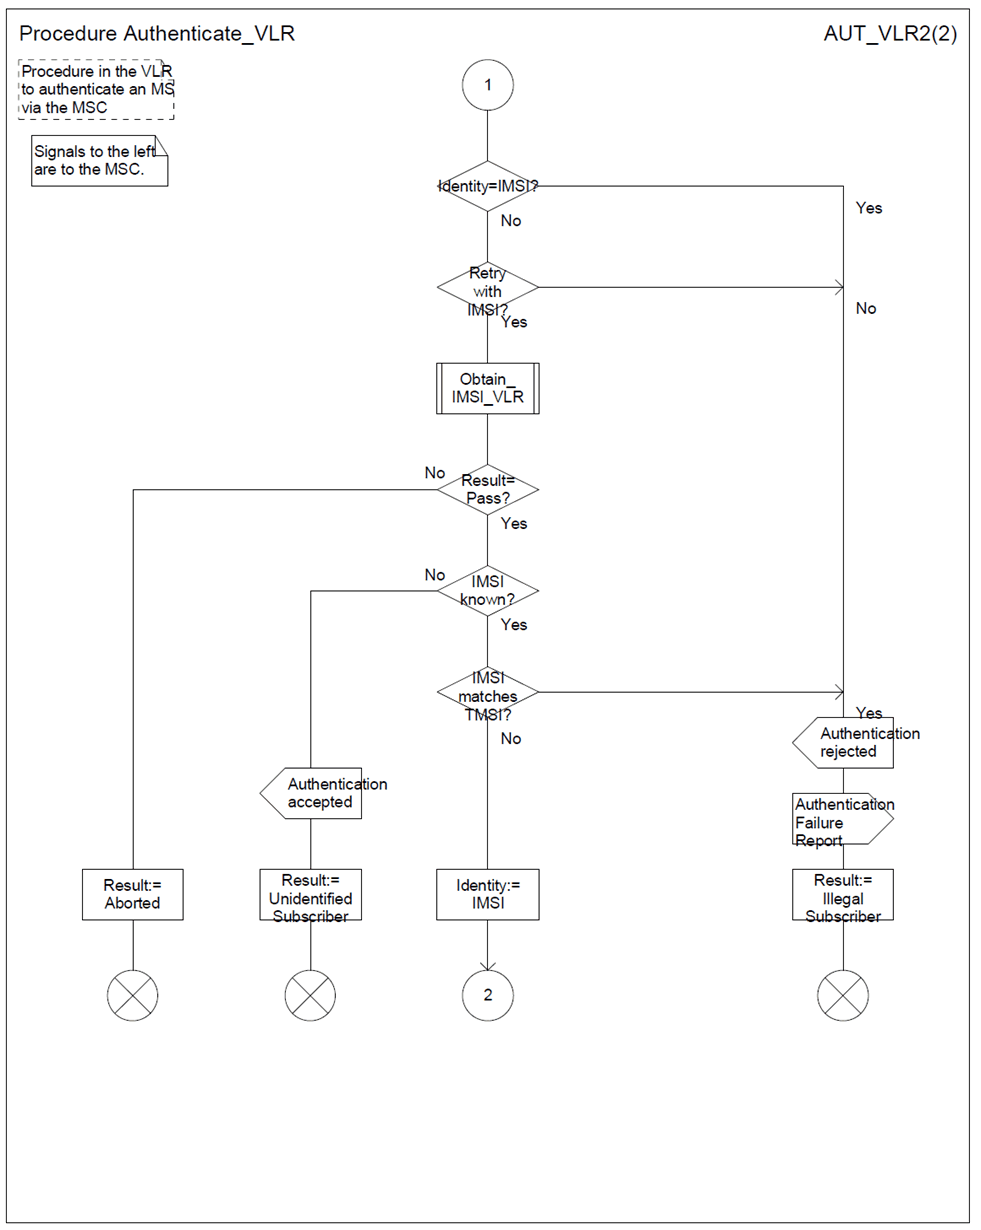 Copy of original 3GPP image for 3GPP TS 23.012, Fig. 4.1.2.2-2: (sheet 2 of 2) Procedure Authenticate_VLR 